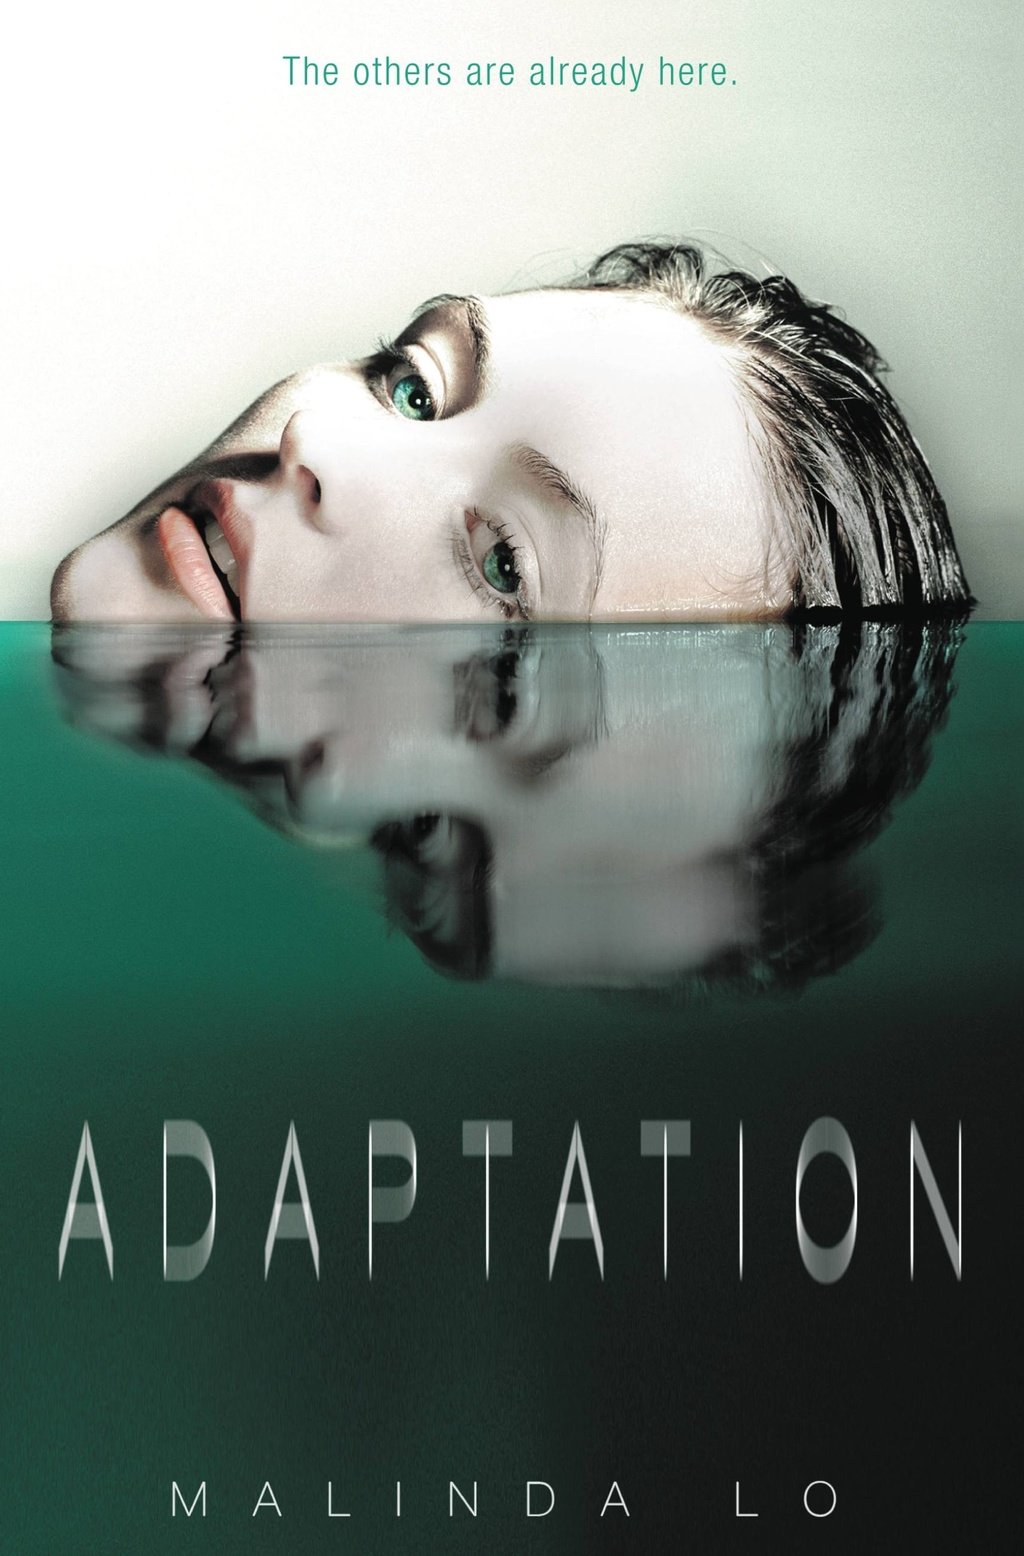 Book 1: Adaptation